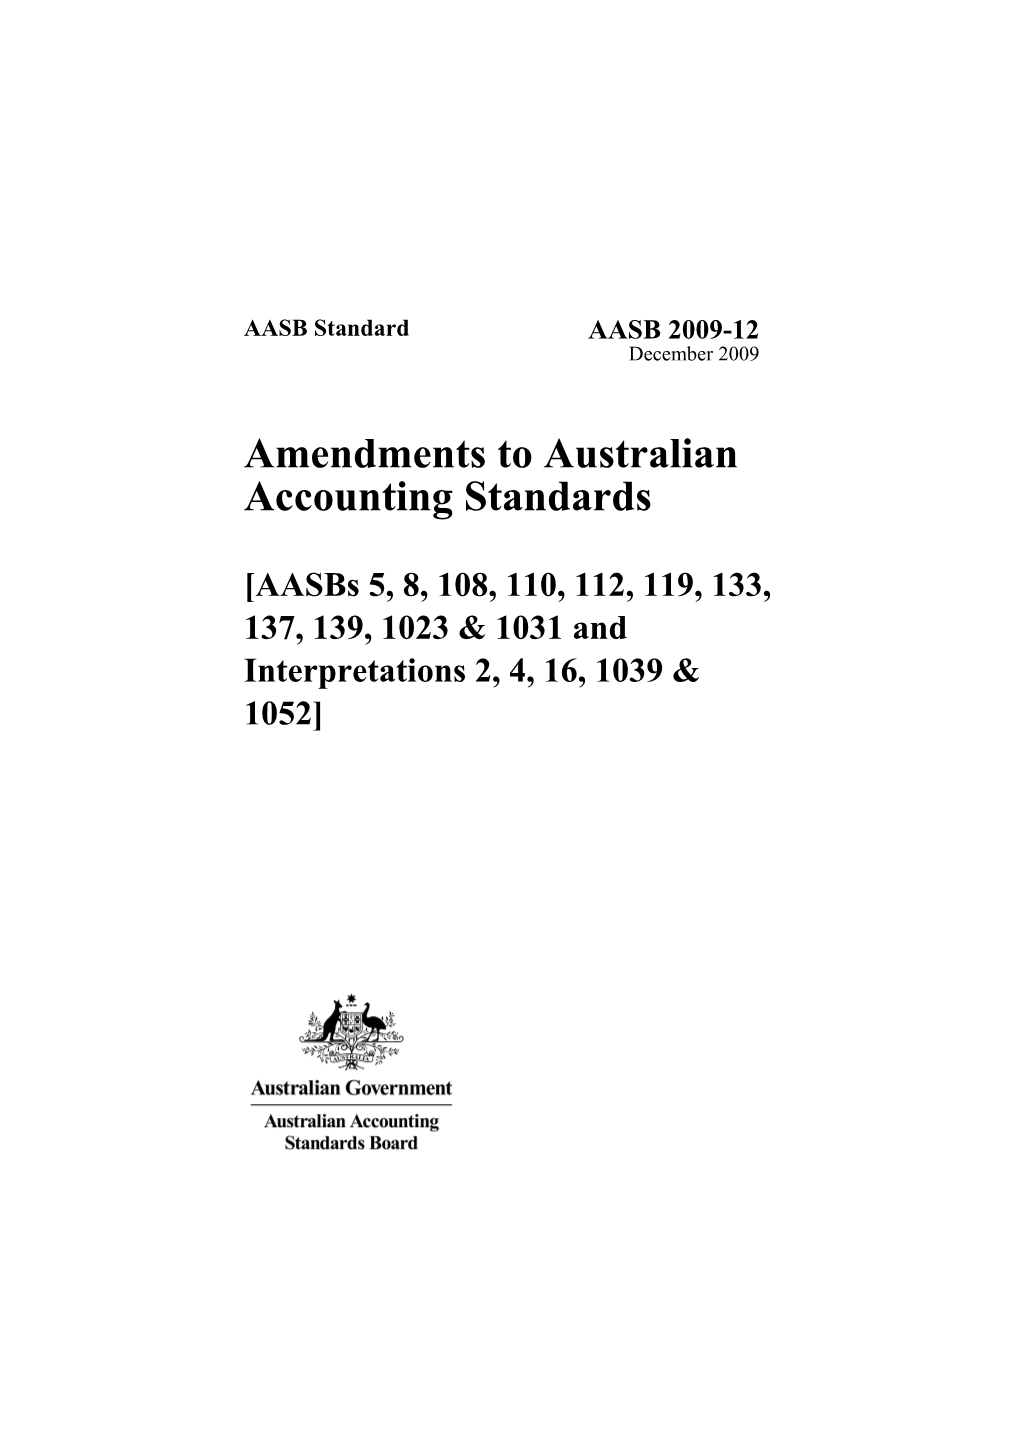 Amendments to Australian Accounting Standards